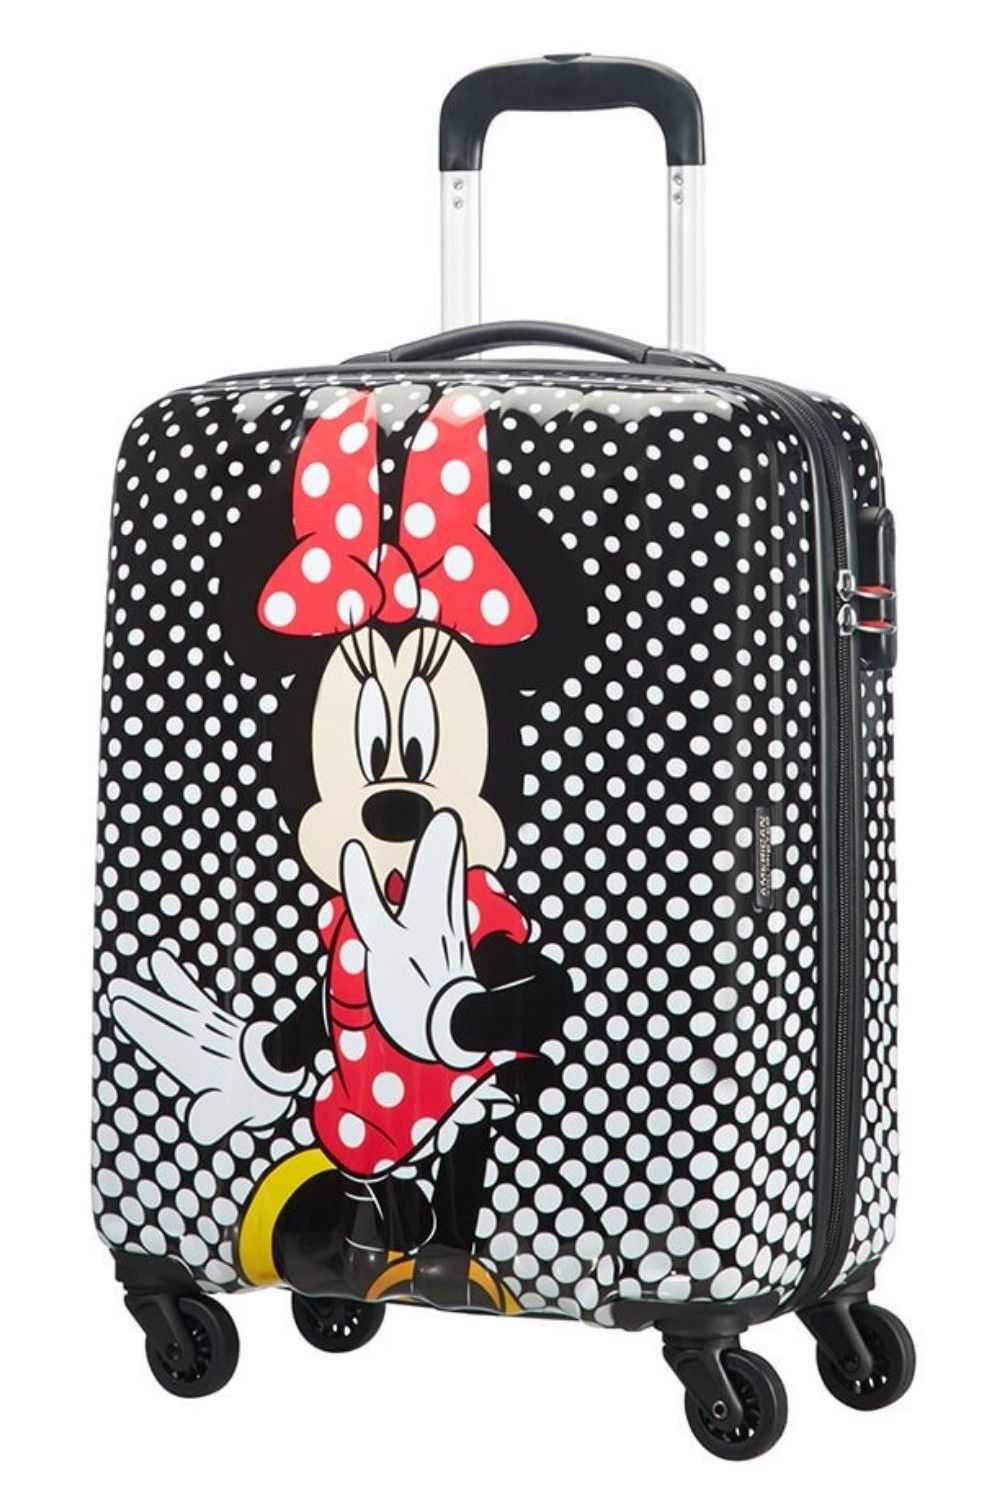 AT Minnie Polka Dot 55x40x20cm carry-on luggage